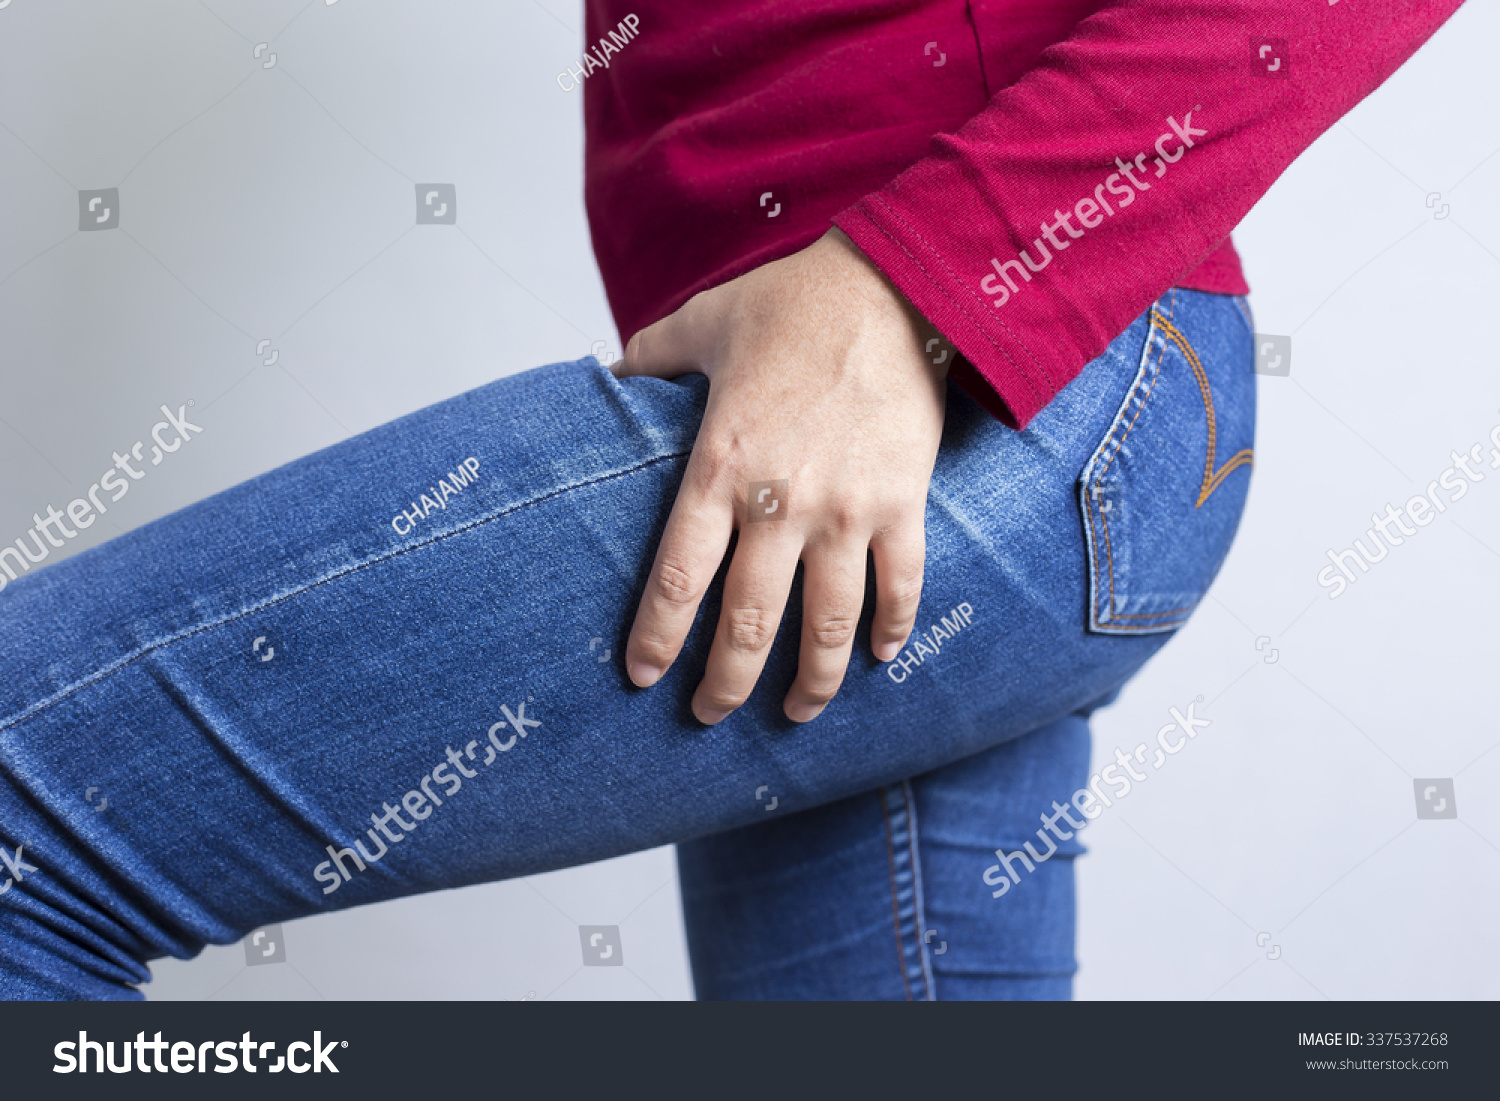 Fat Woman Her Big Thigh Stock Photo 337537268 | Shutterstock